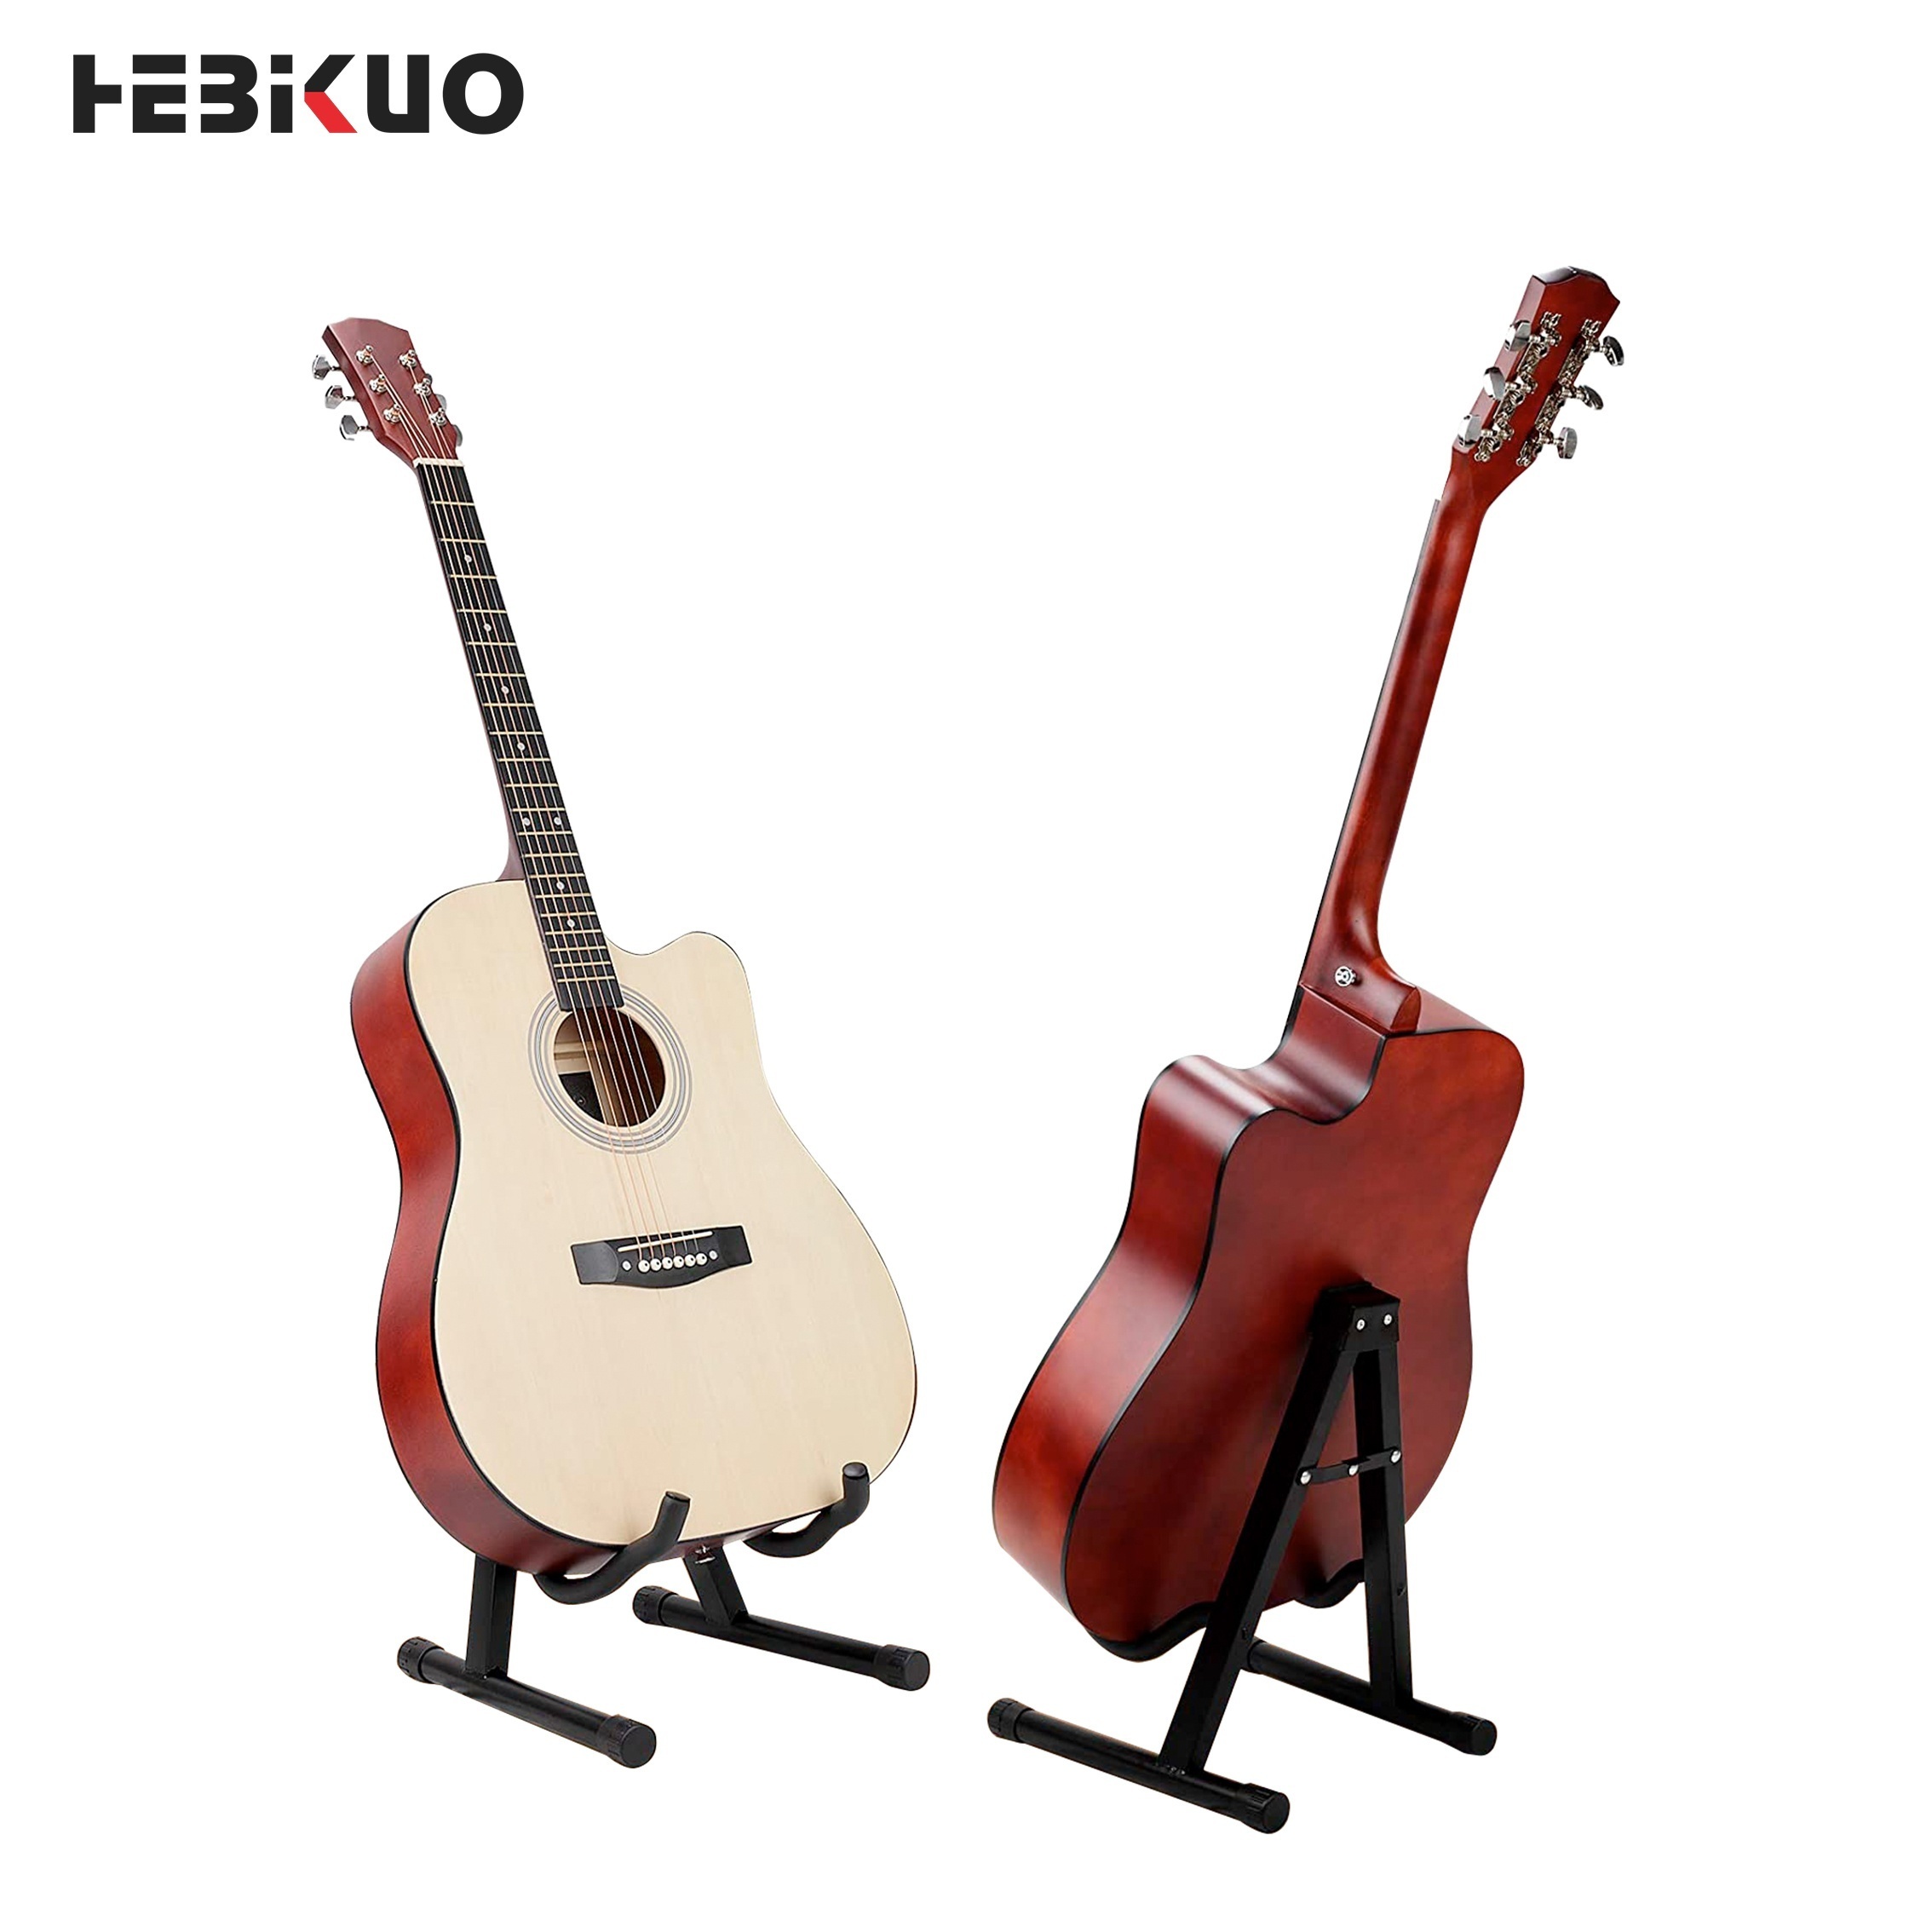 Iapetus - Soporte de pared para guitarra, soporte de pared para ukelele,  accesorios de pared para el hogar o el estudio, soporte para guitarras